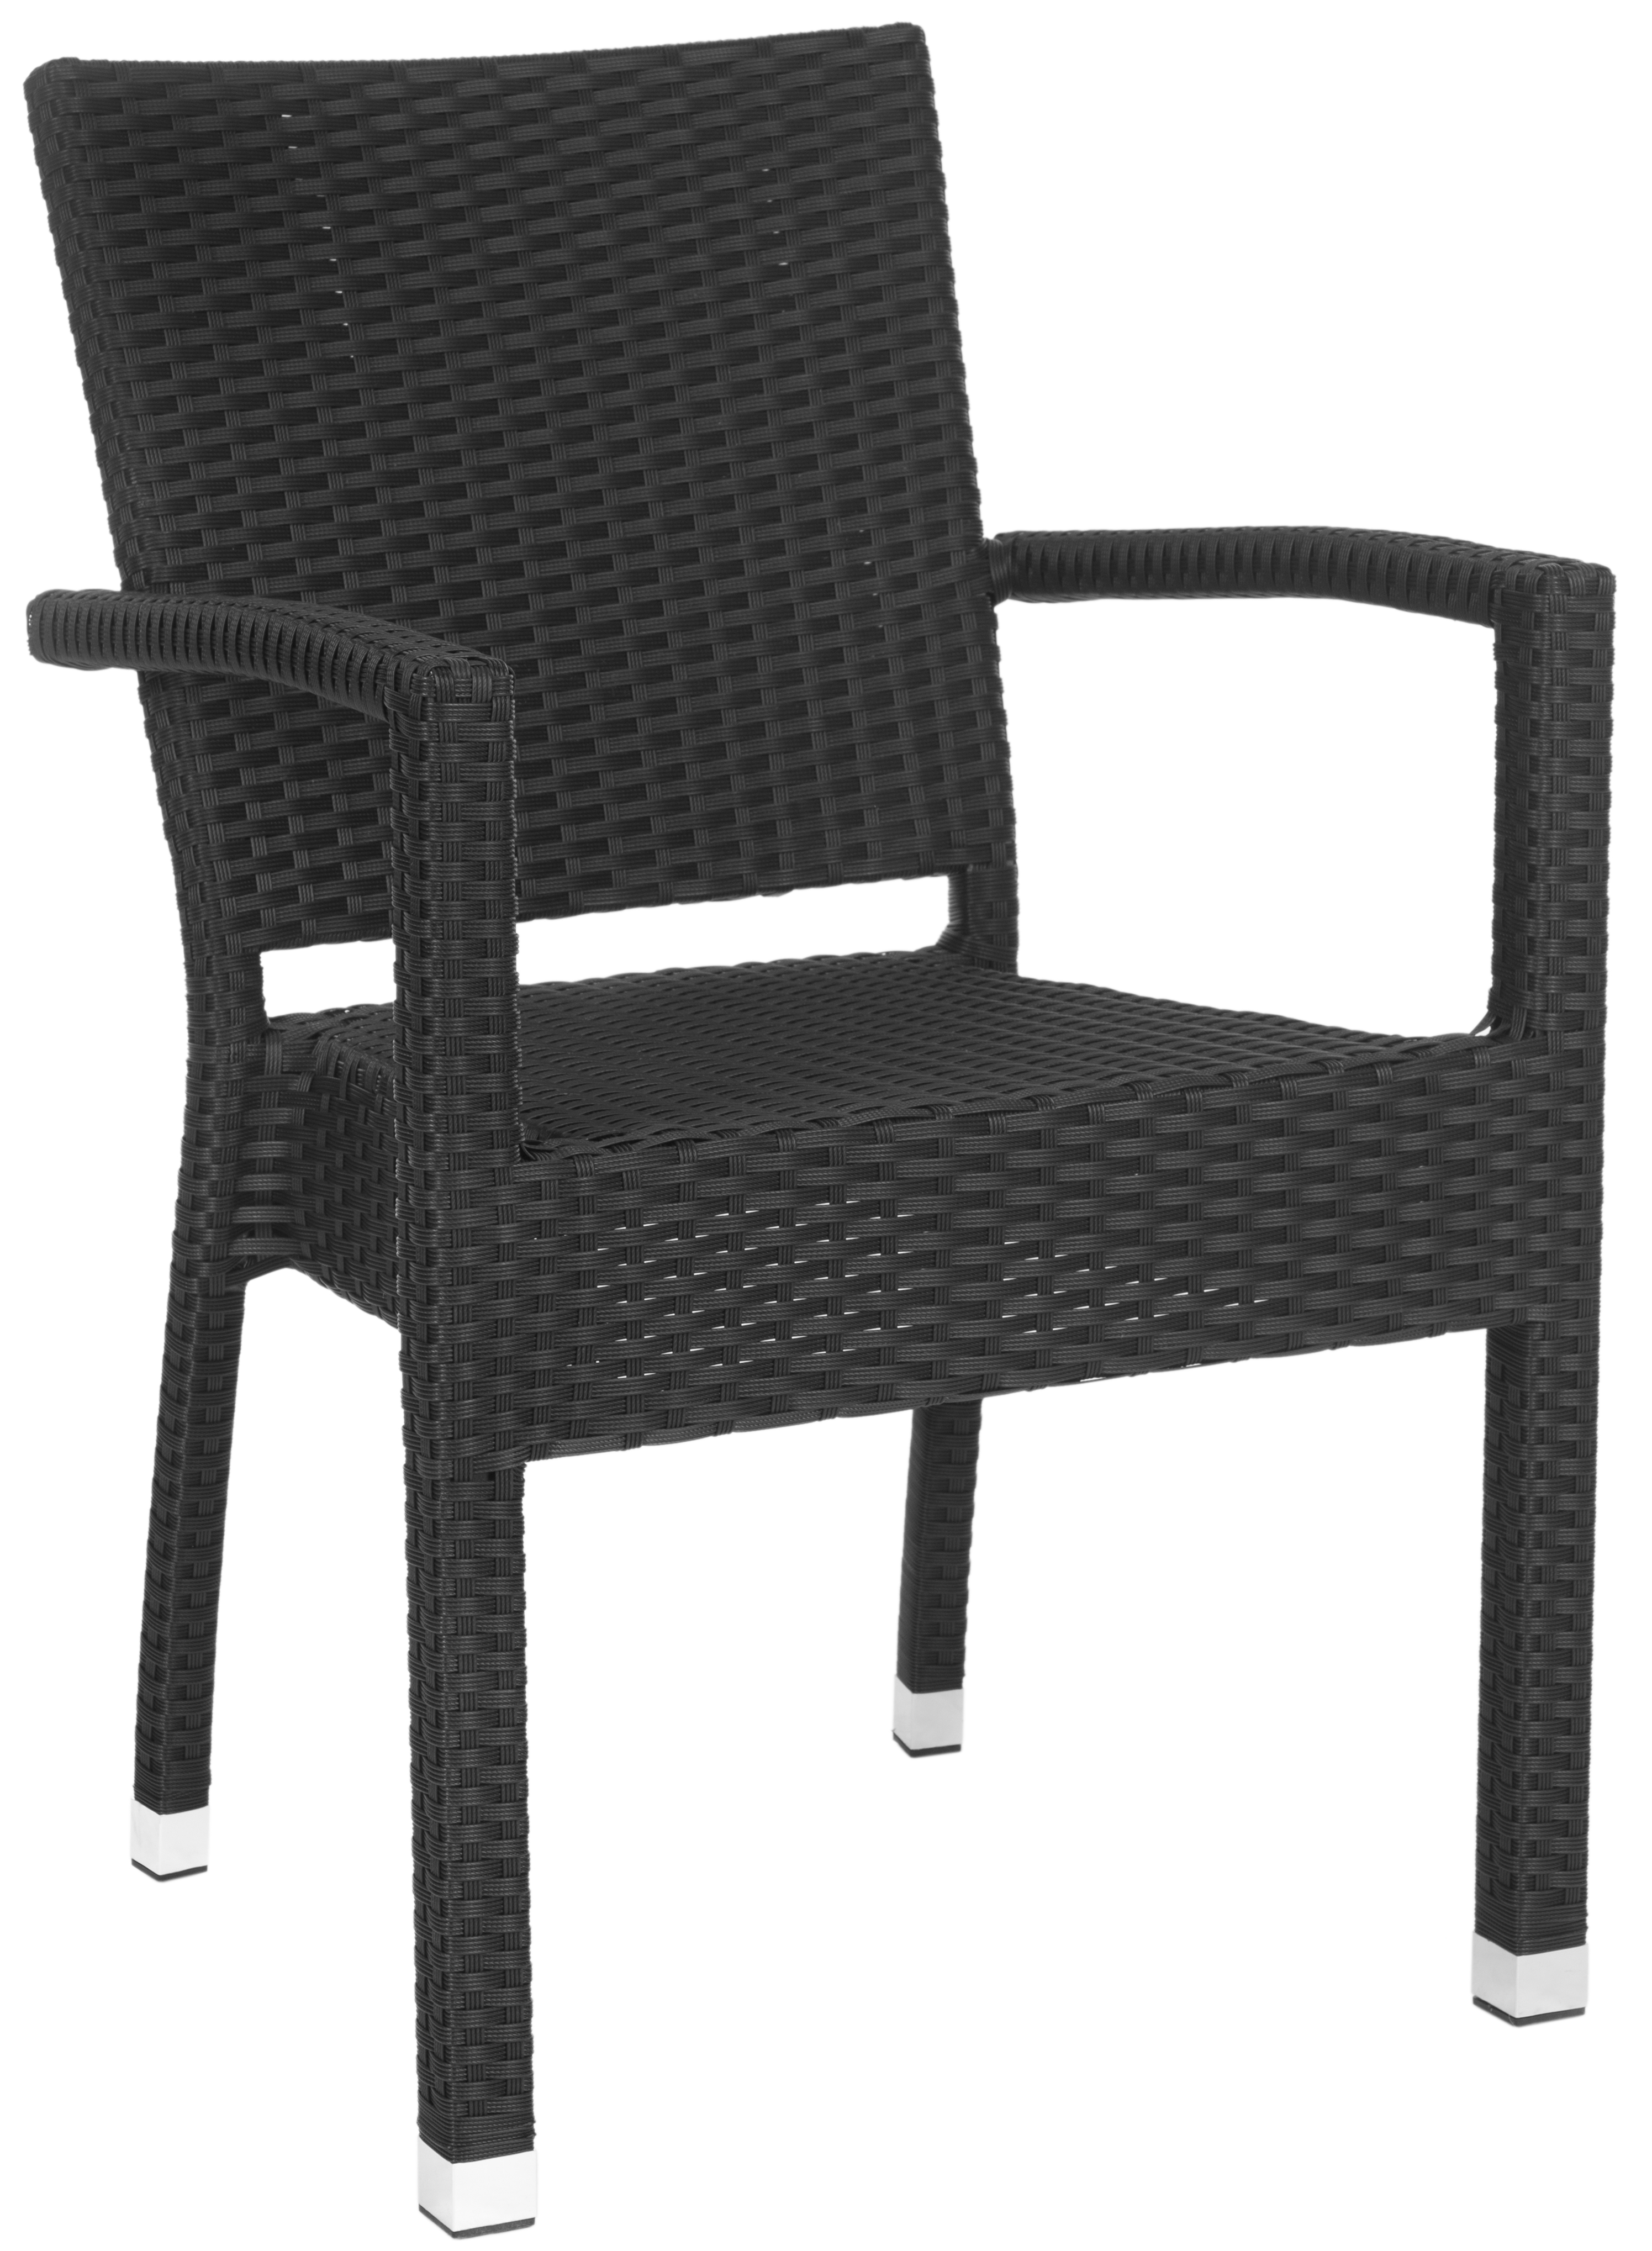 Kelda Stacking Arm Chair - Black - Arlo Home - Image 1